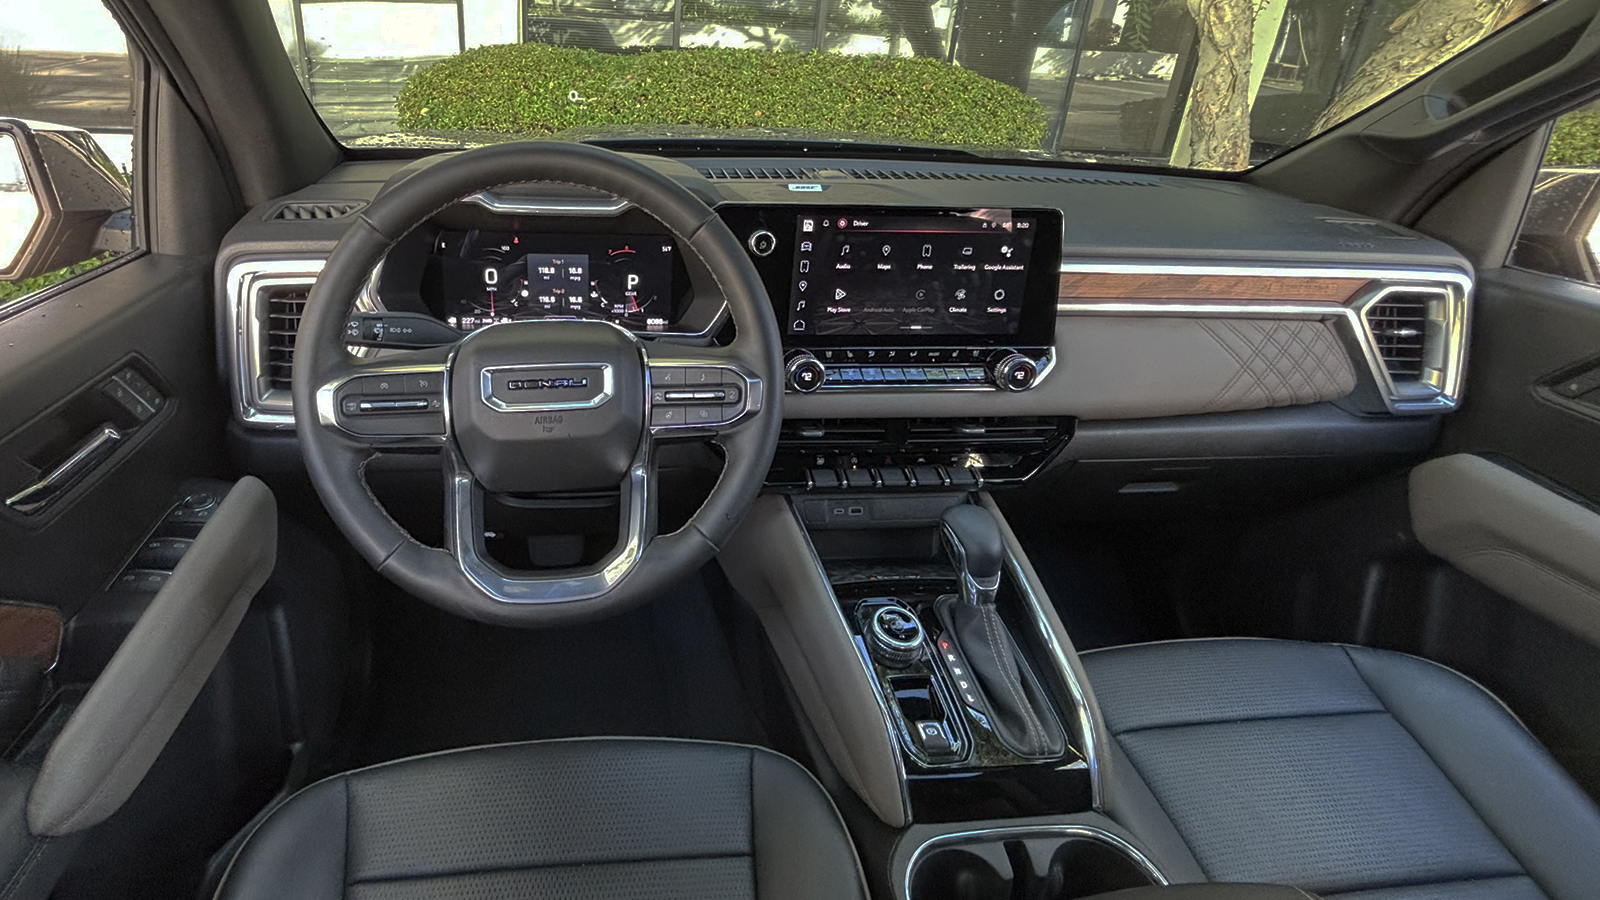 GMC Canyon Denali Interior Review Midsize luxury truck benchmark